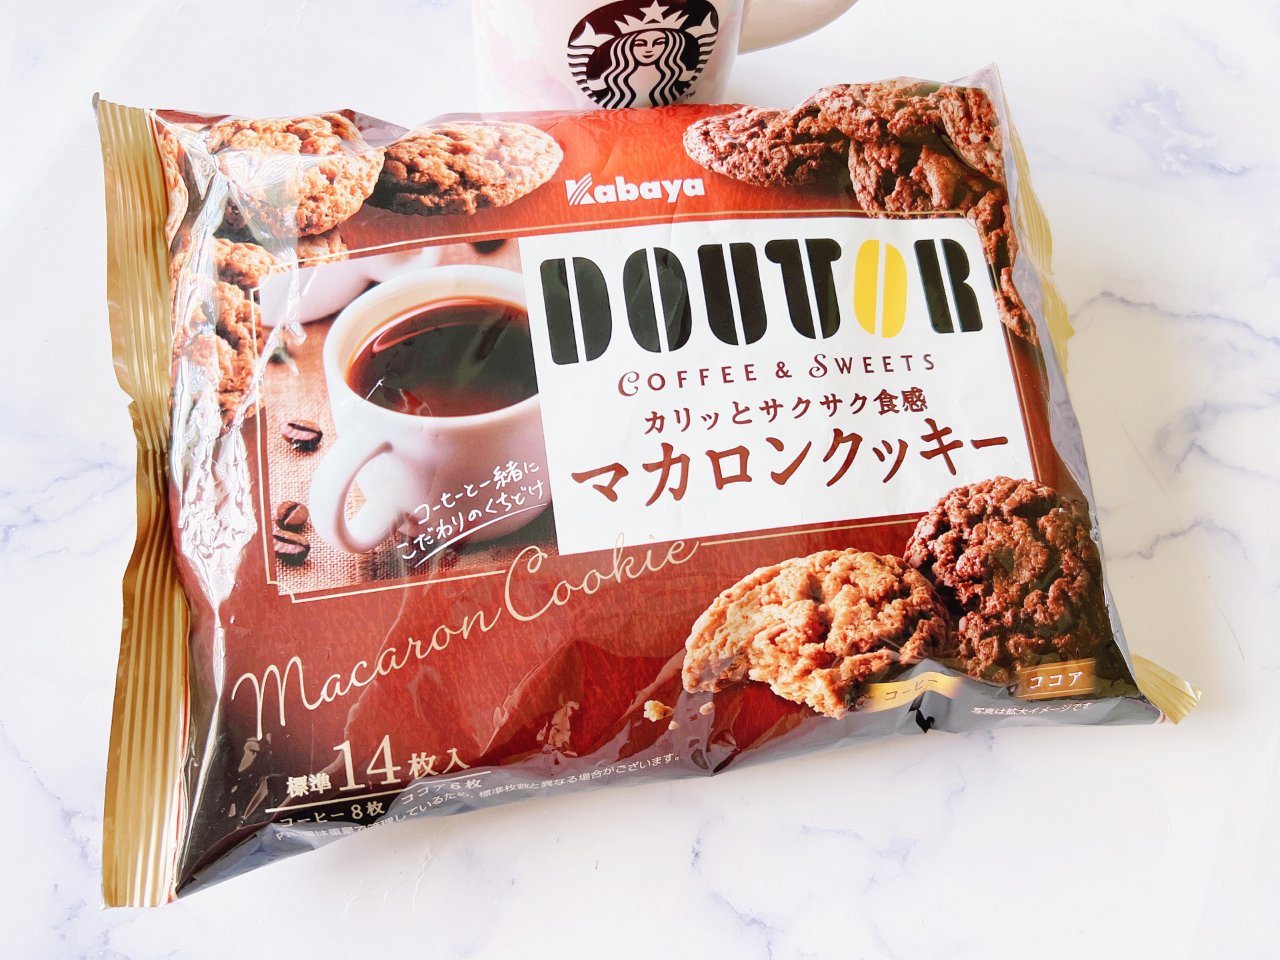 DOUTOR 咖啡➕巧克力 🍪曲奇饼干 ...